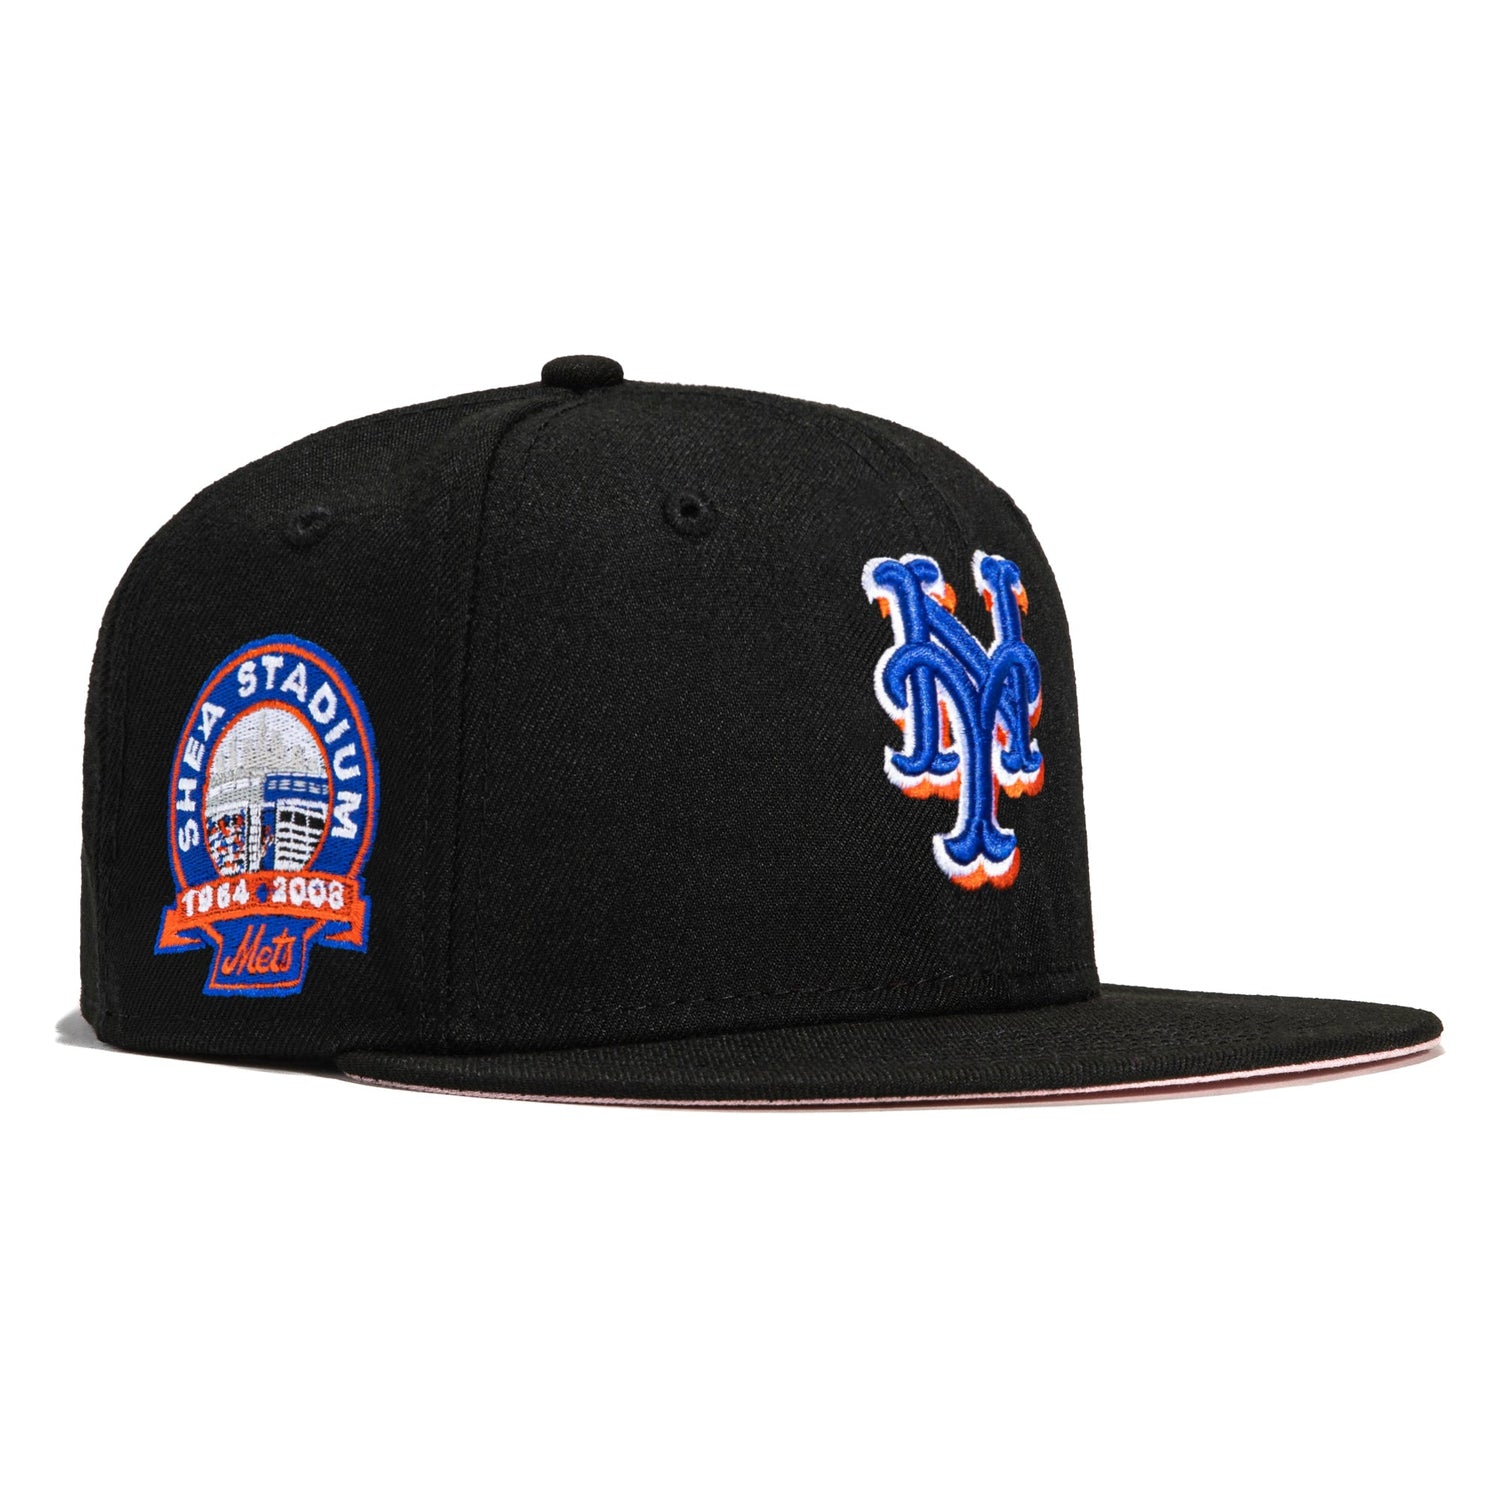 Mets™ baseball hat in fuchsia